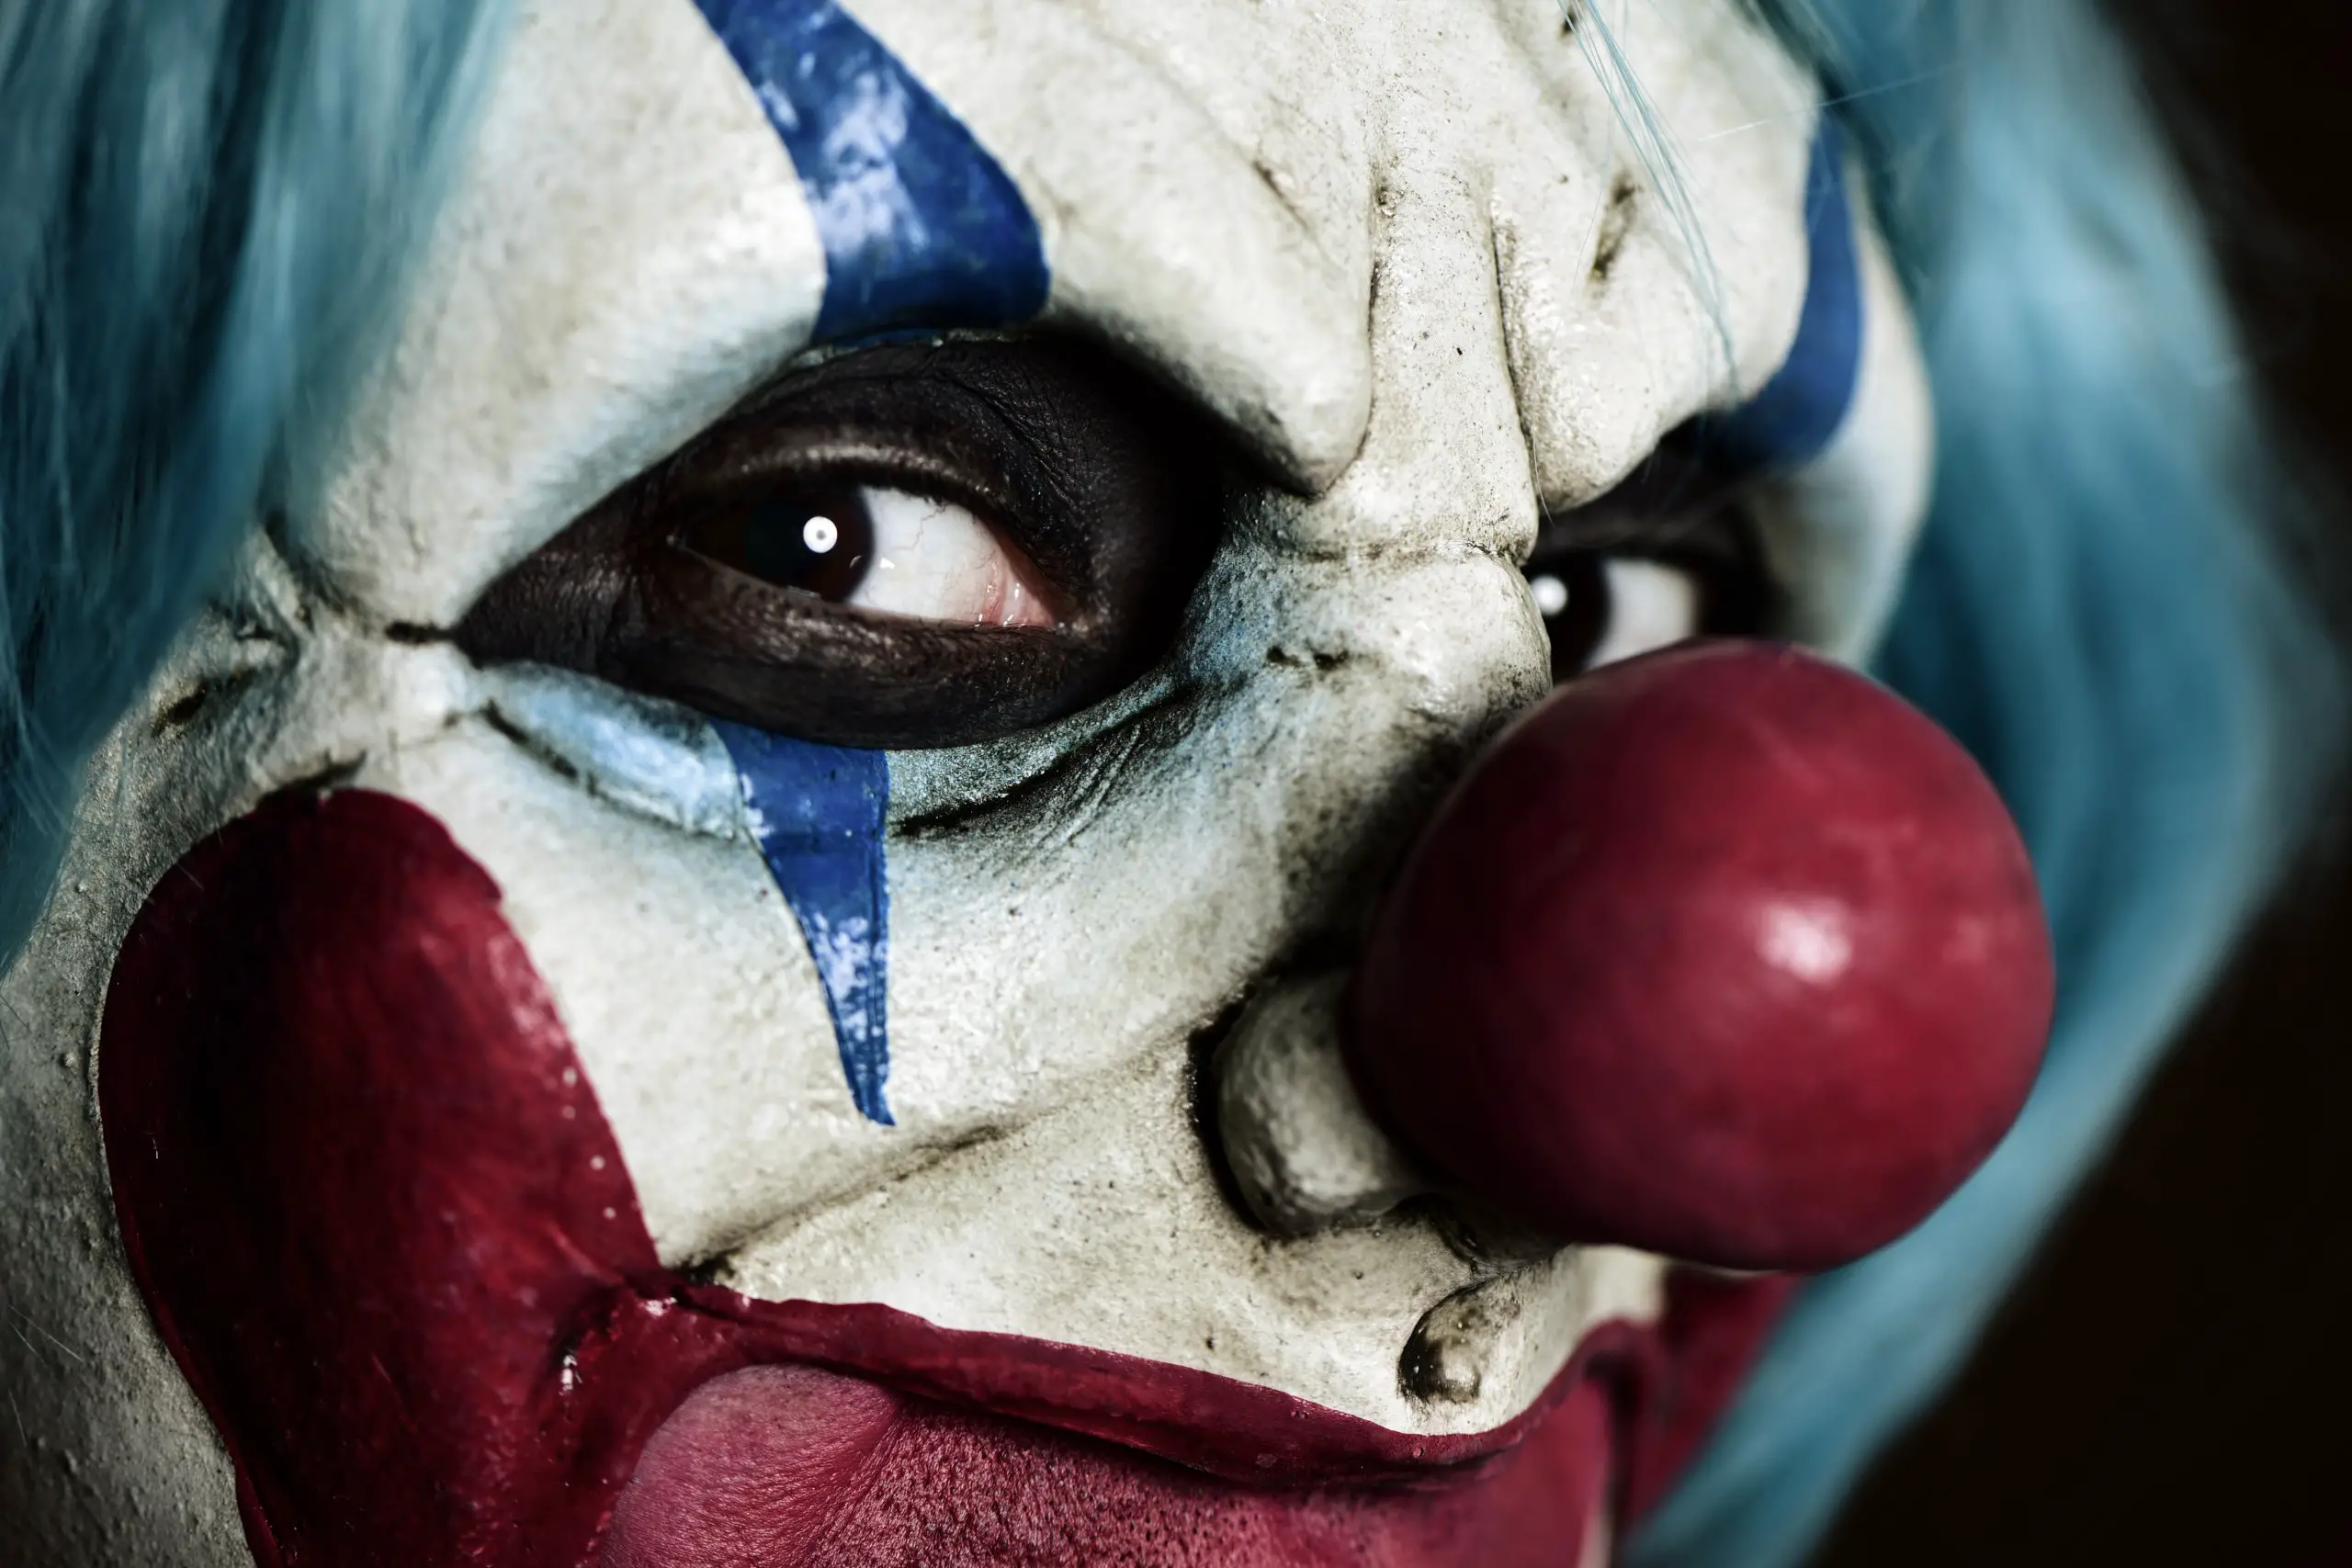 closeup of a scary evil clown